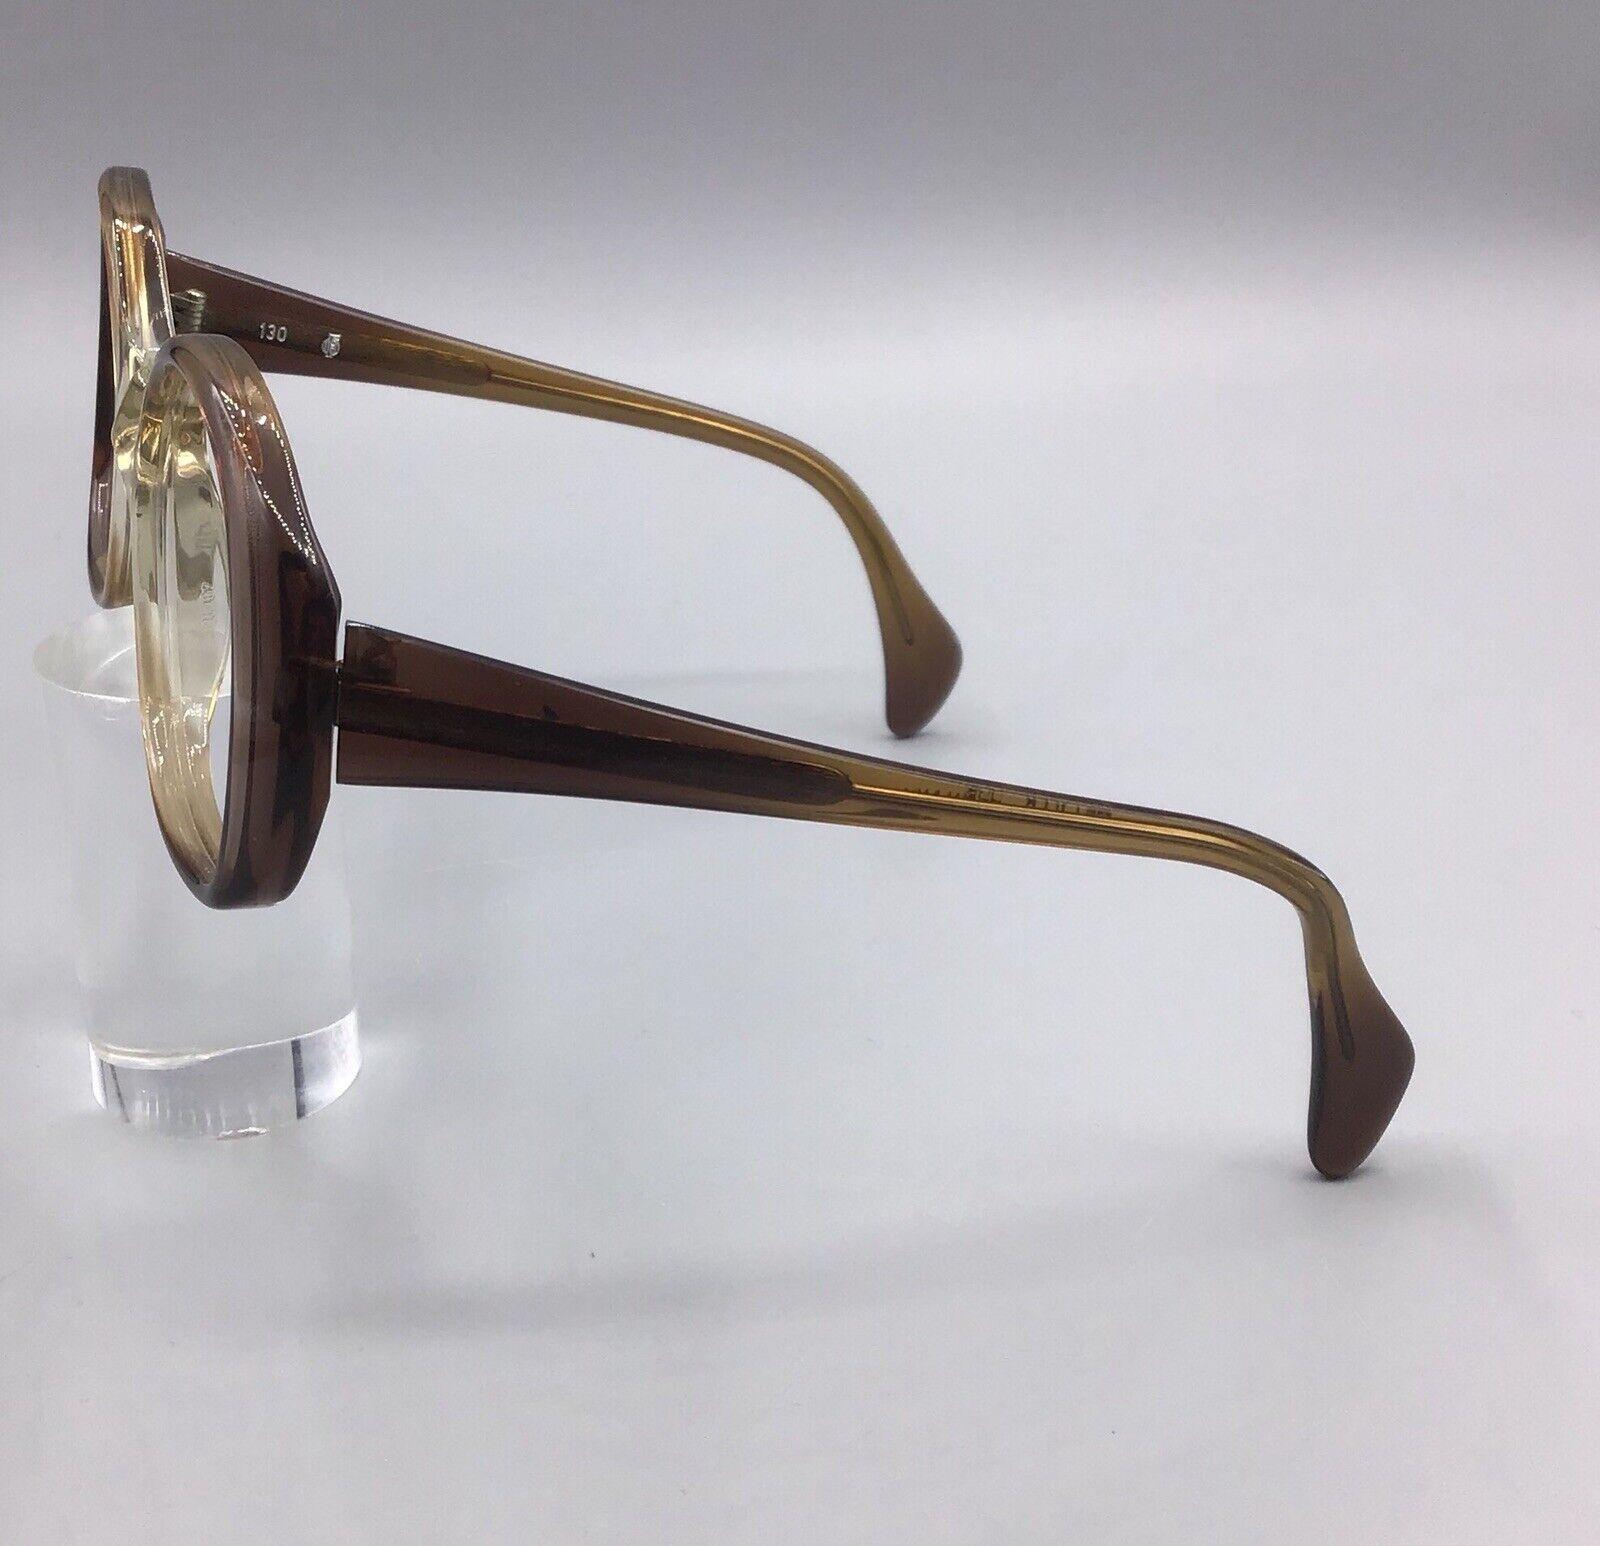 Metzler Germany 5475 748 occhiale vintage eyewear frame brillen lunettes